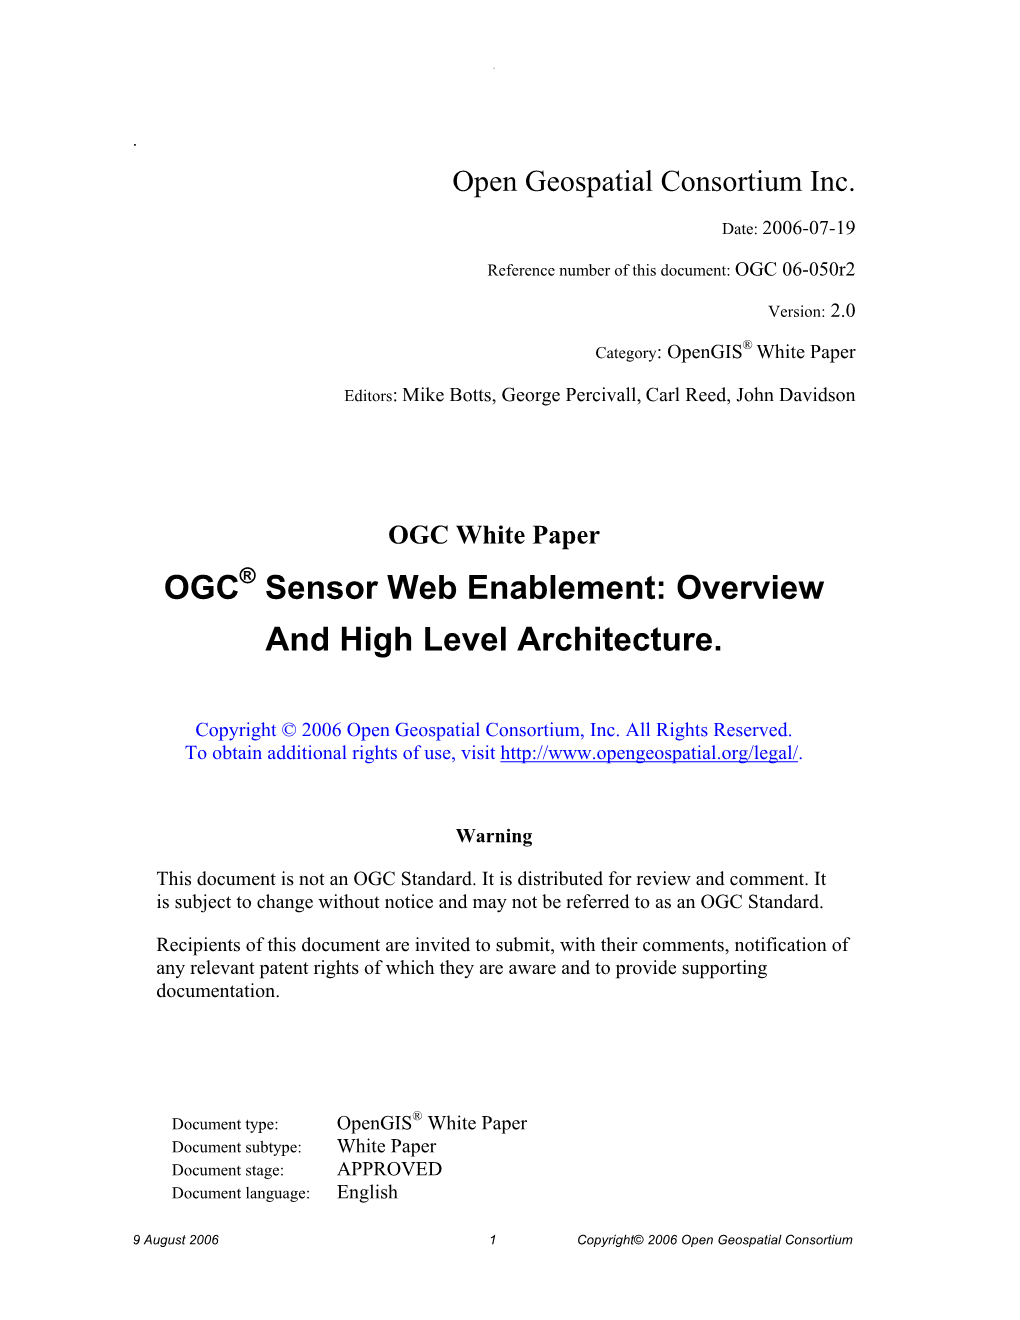 Open Geospatial Consortium Sensor Web Enablement